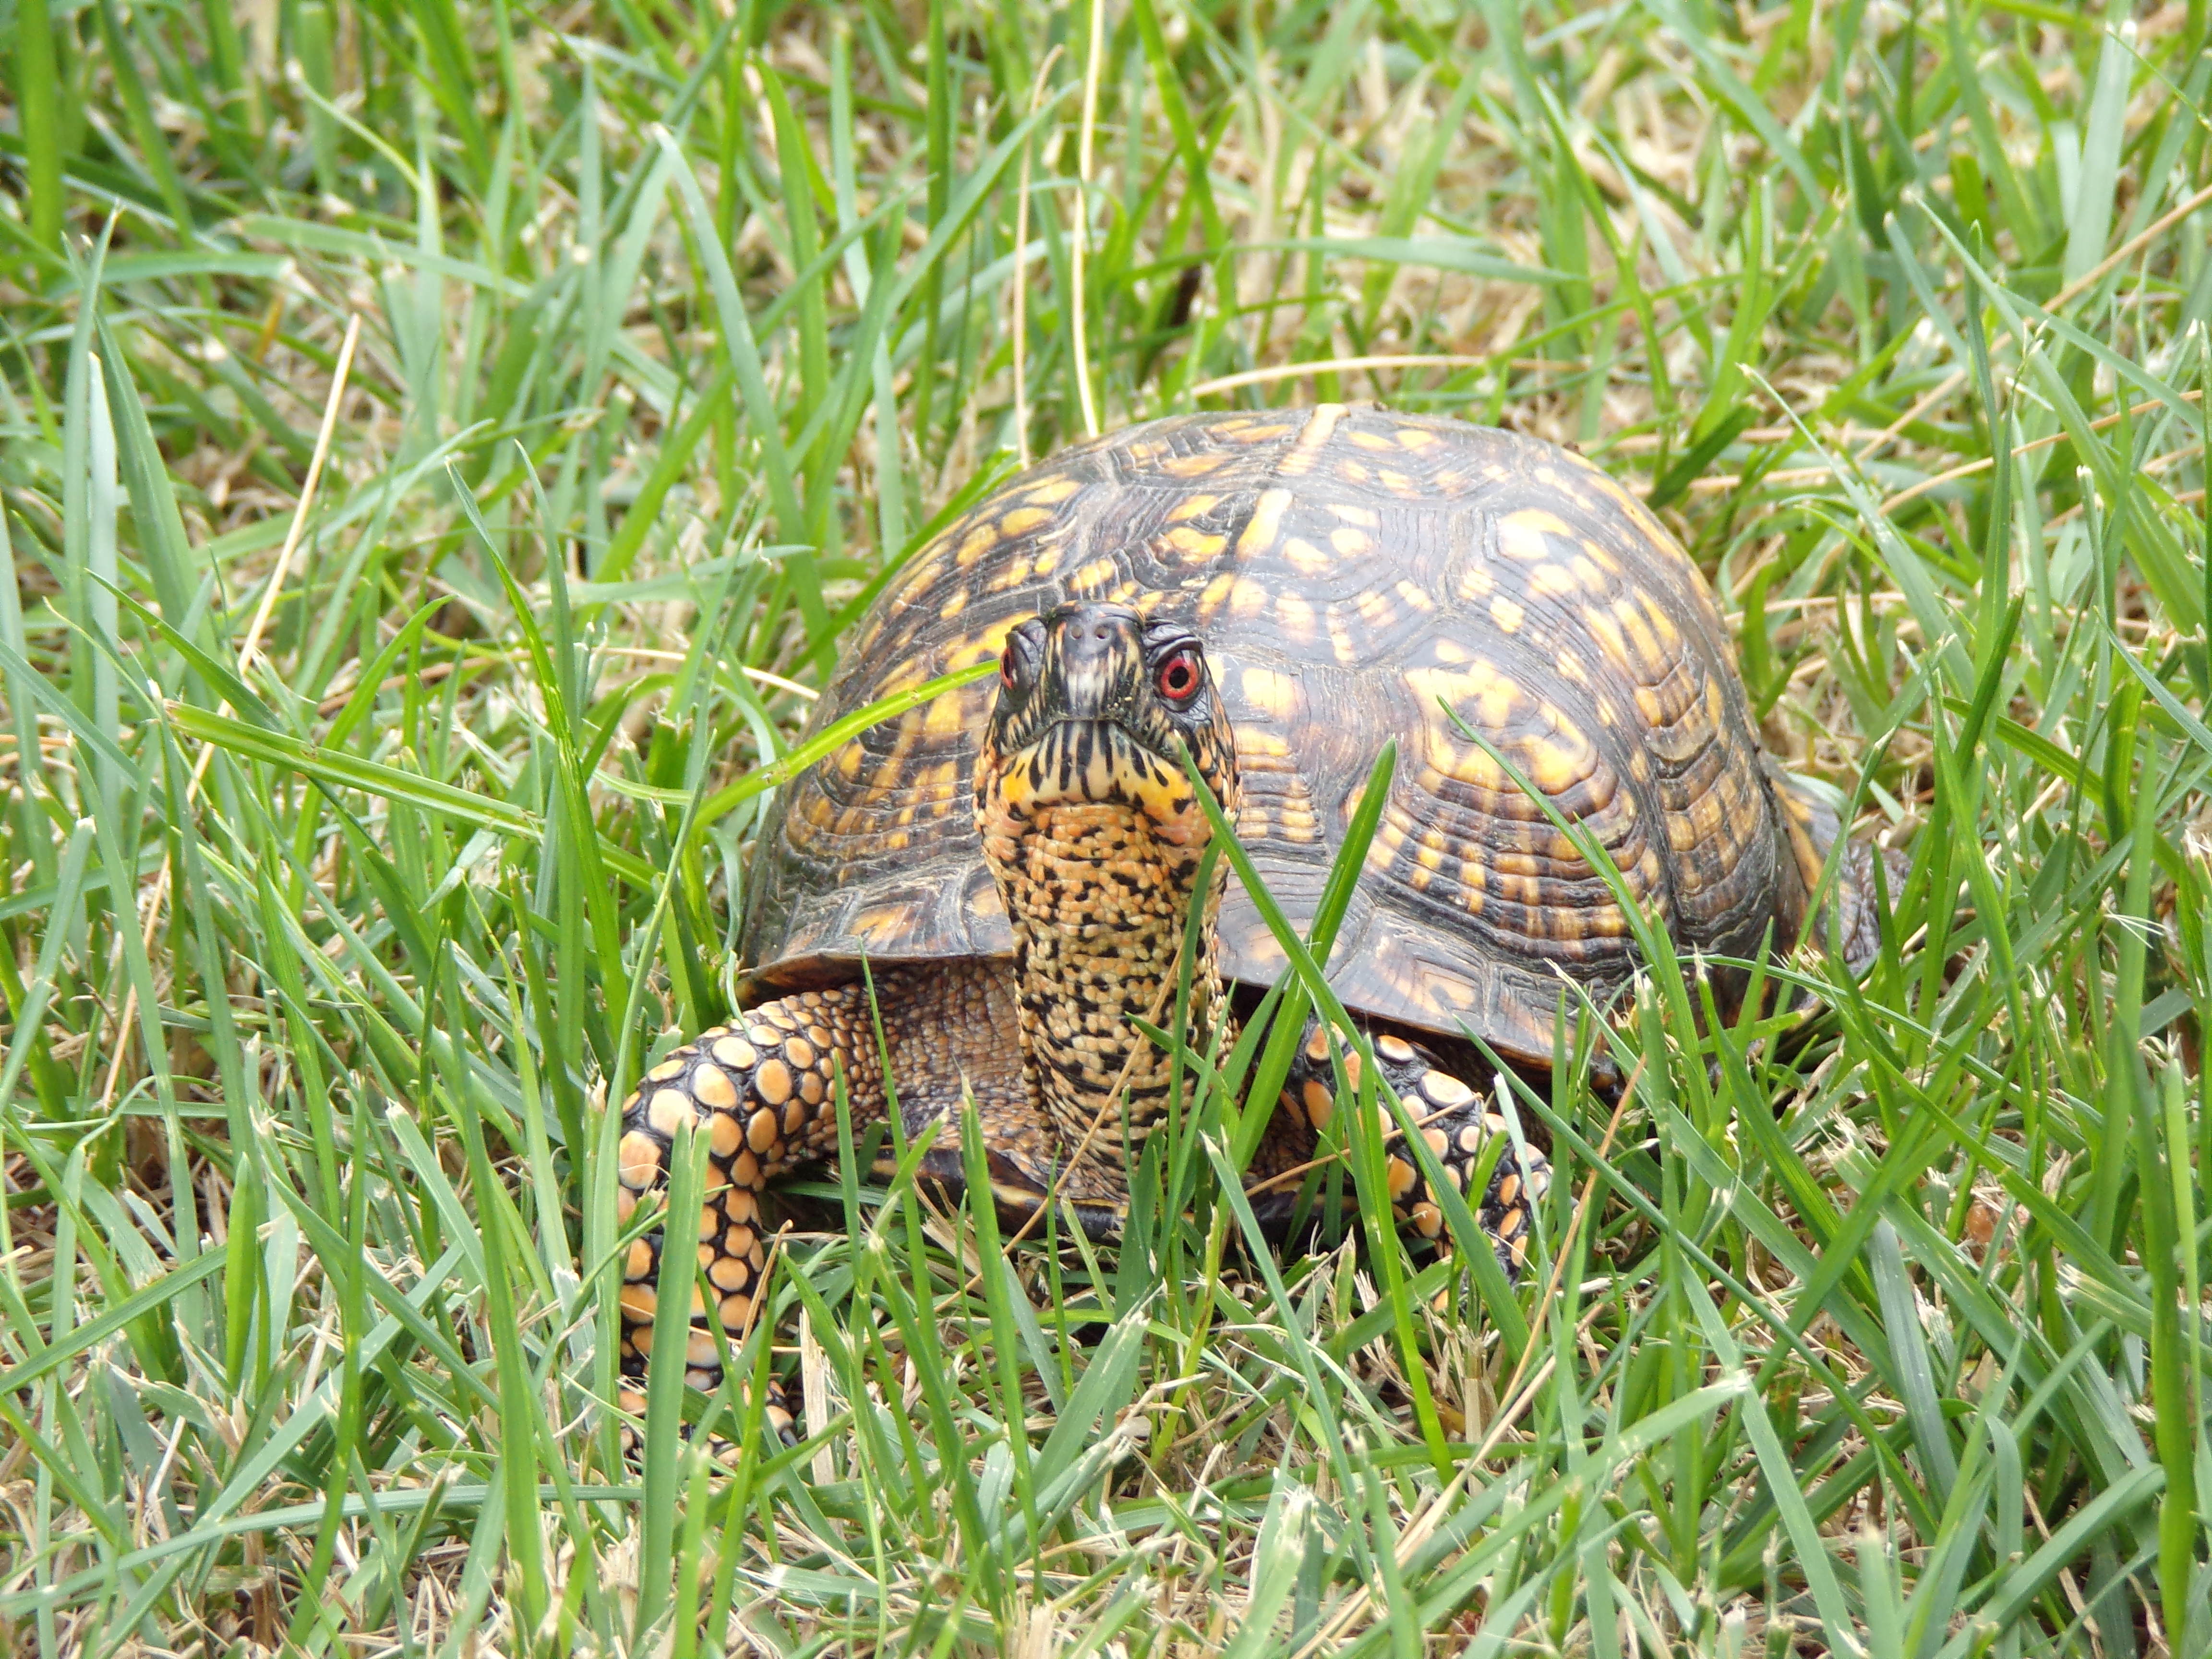 https://upload.wikimedia.org/wikipedia/commons/6/69/Eastern_box_turtle_in_the_grass.jpg